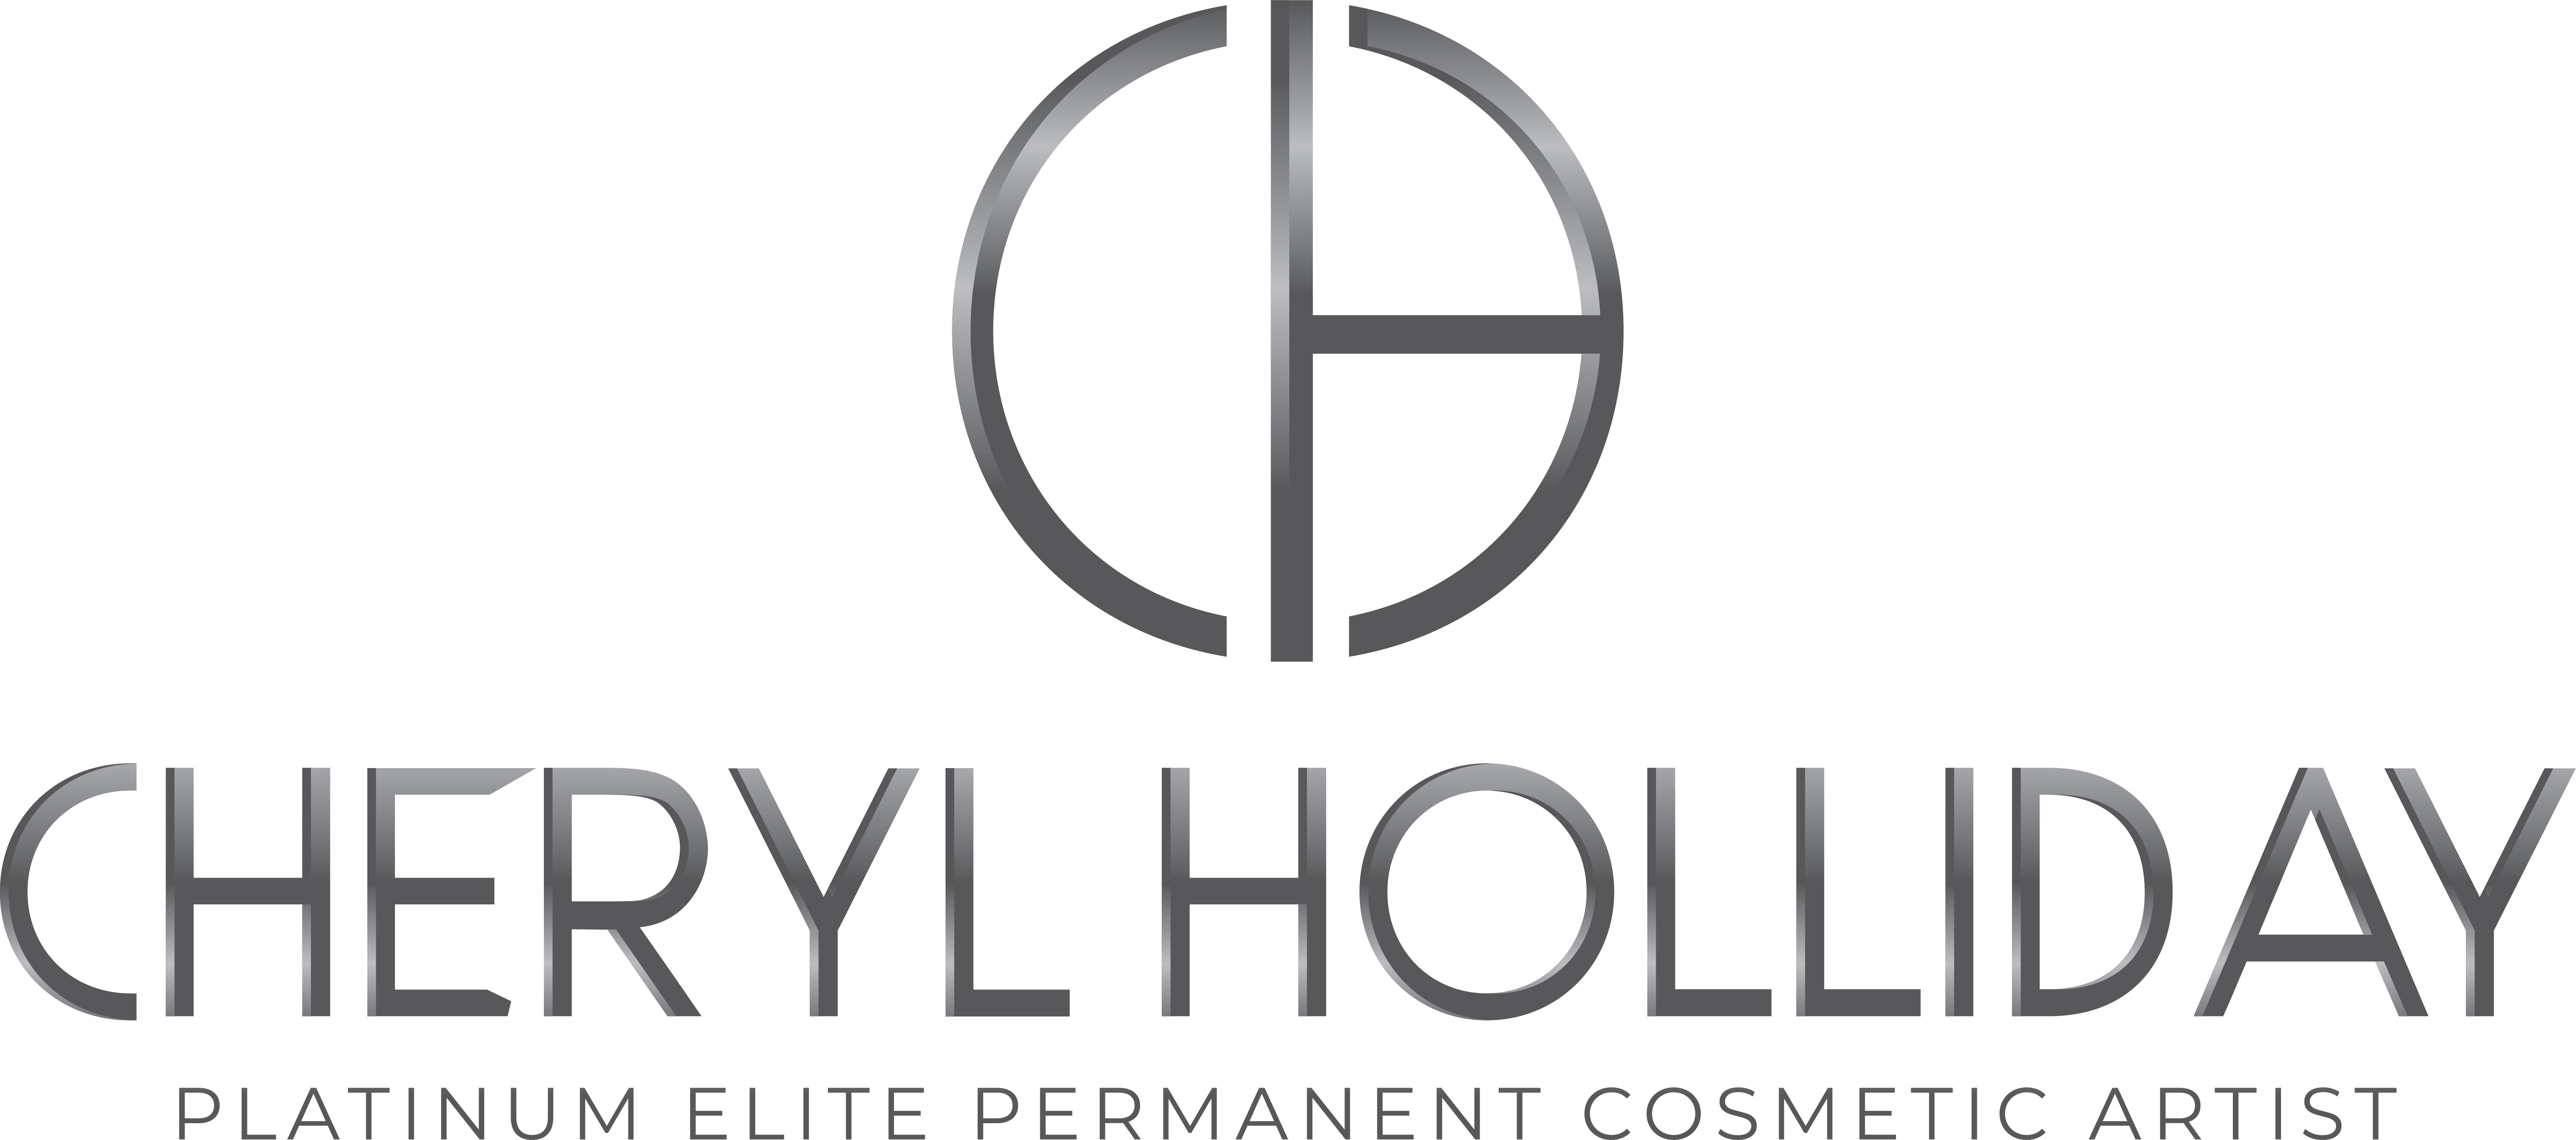 Cheryl Holliday logo